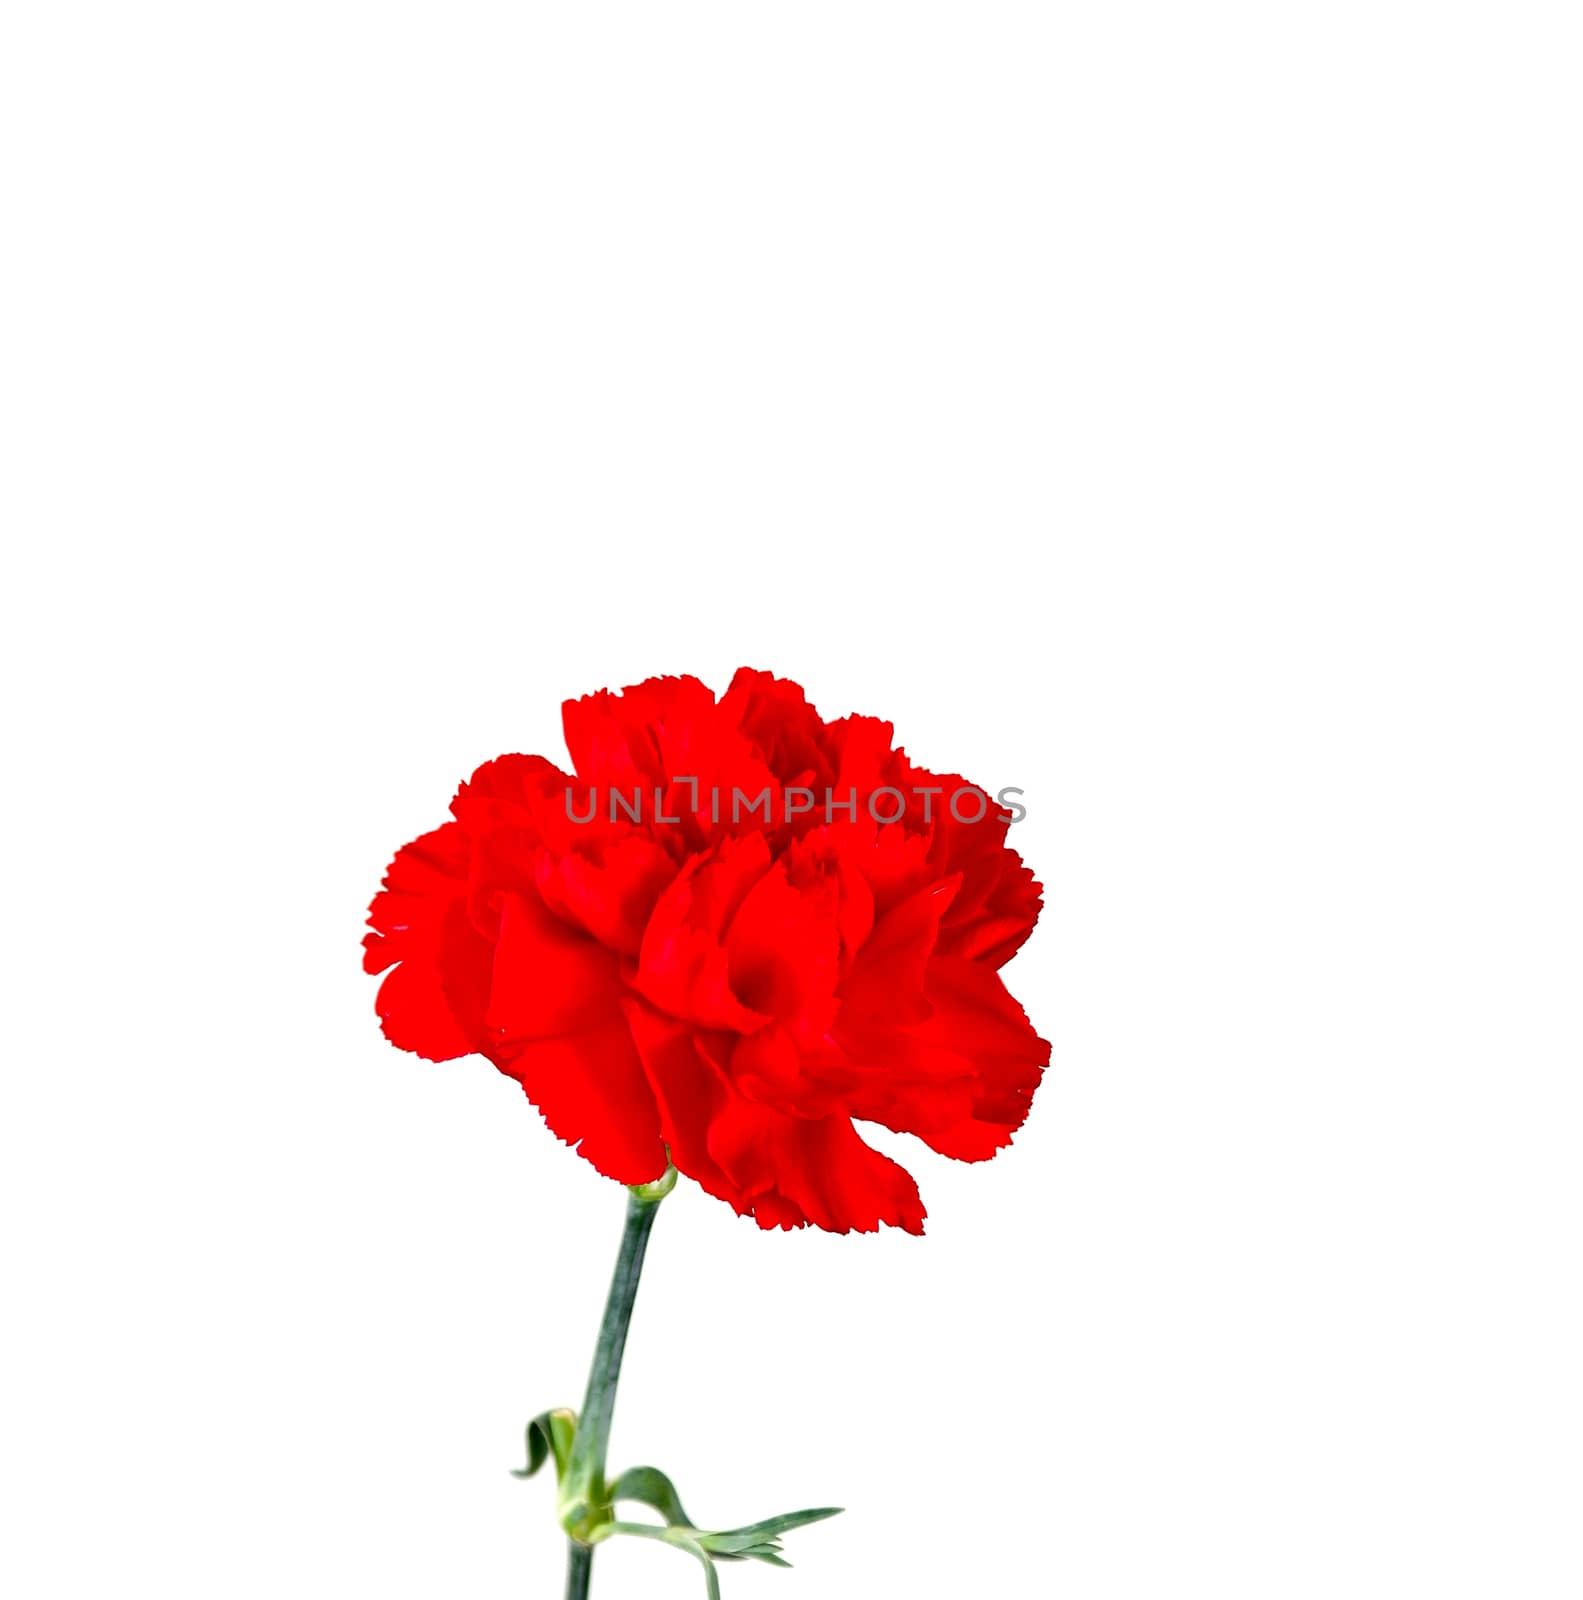 Red carnation over white